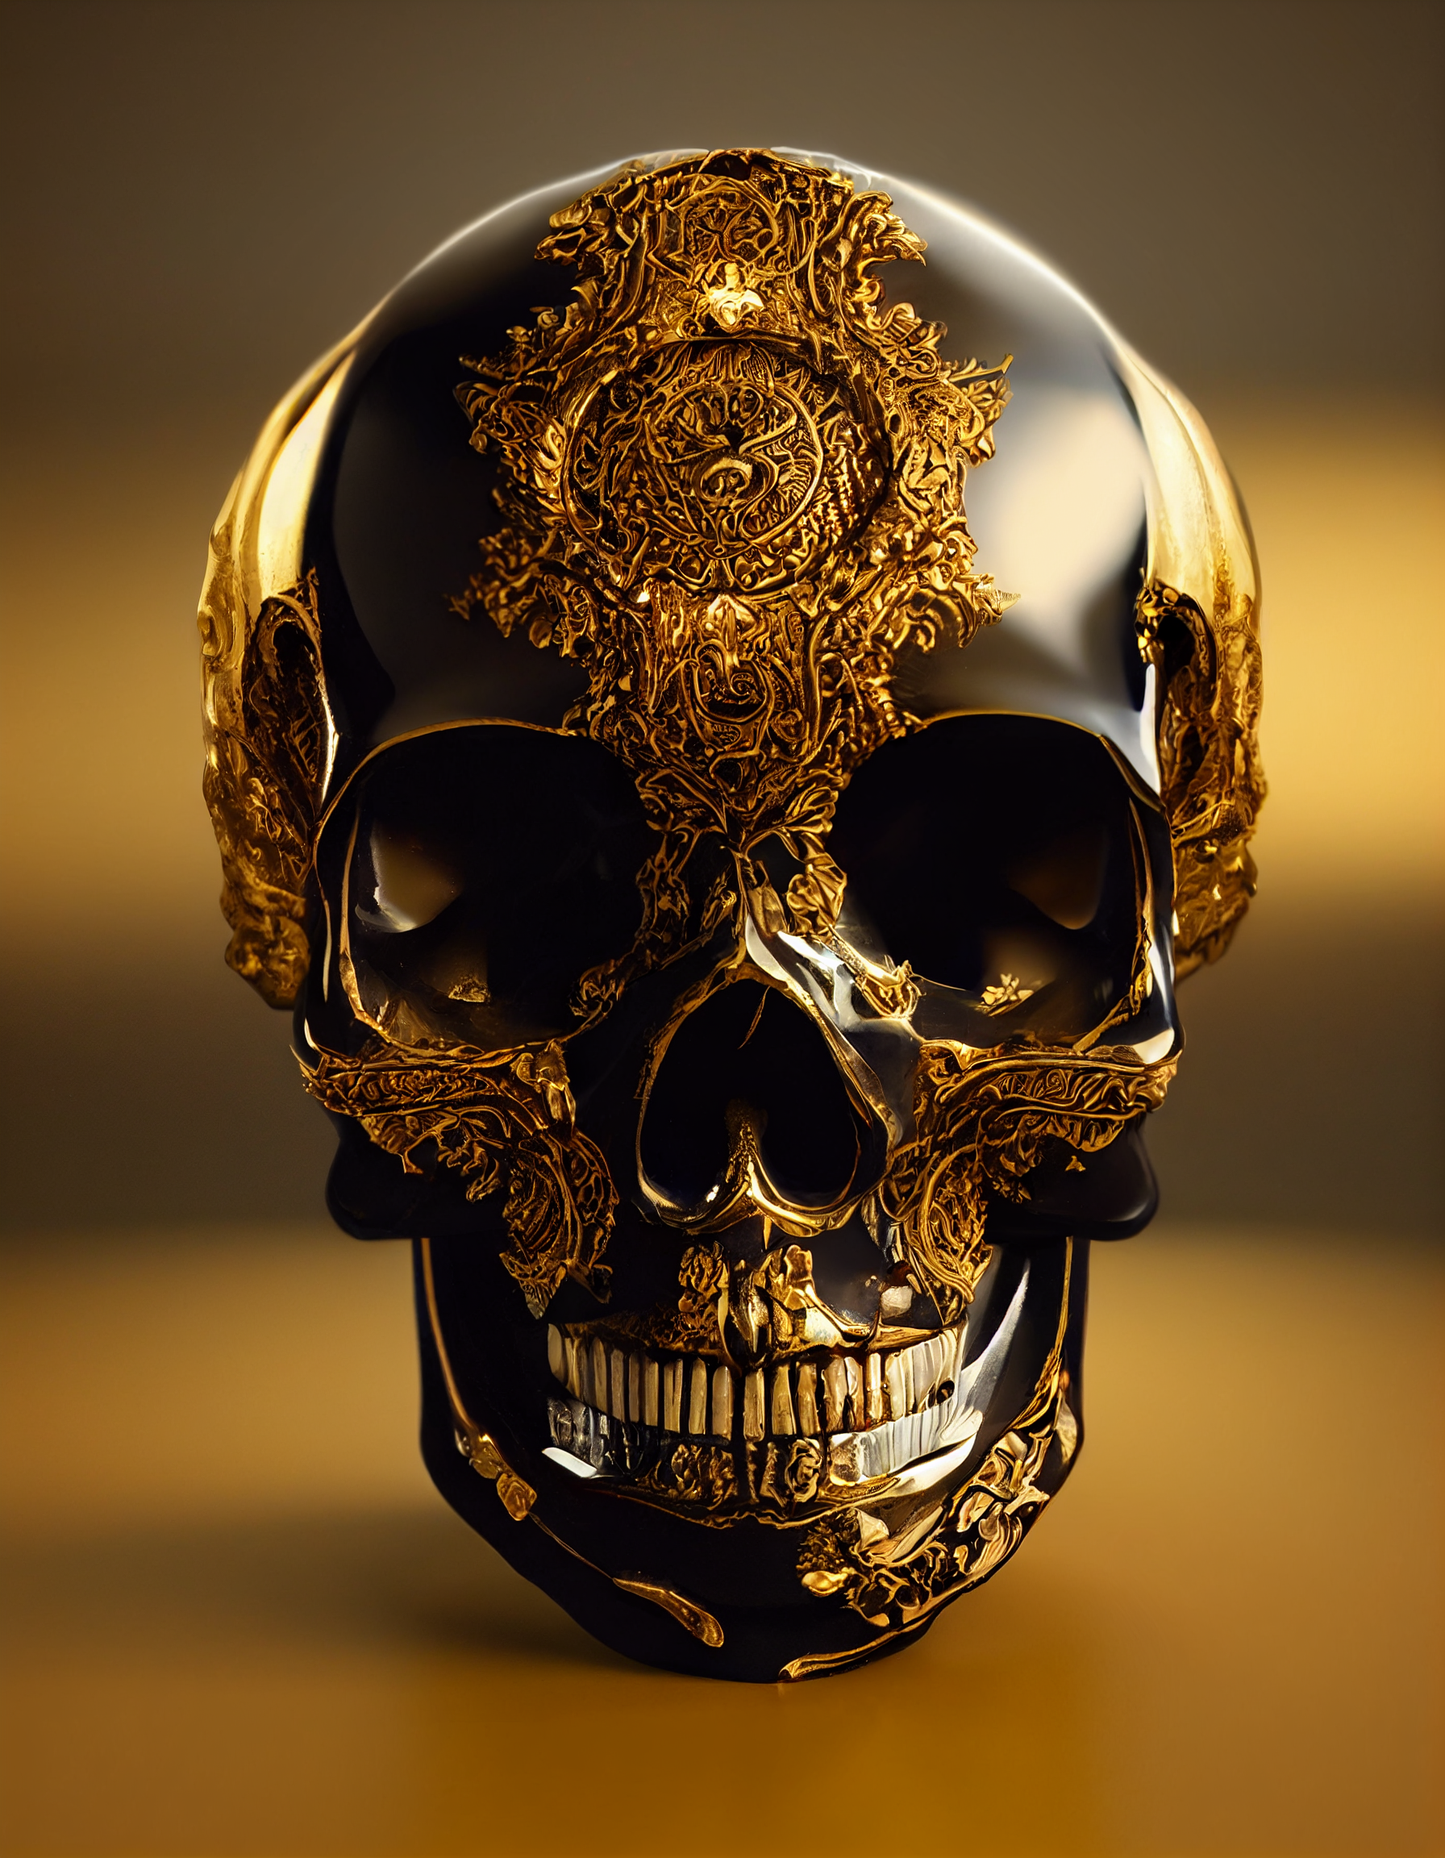 Obsidian Skull Gilded in Gold 1.0 Metal Print Wall Art